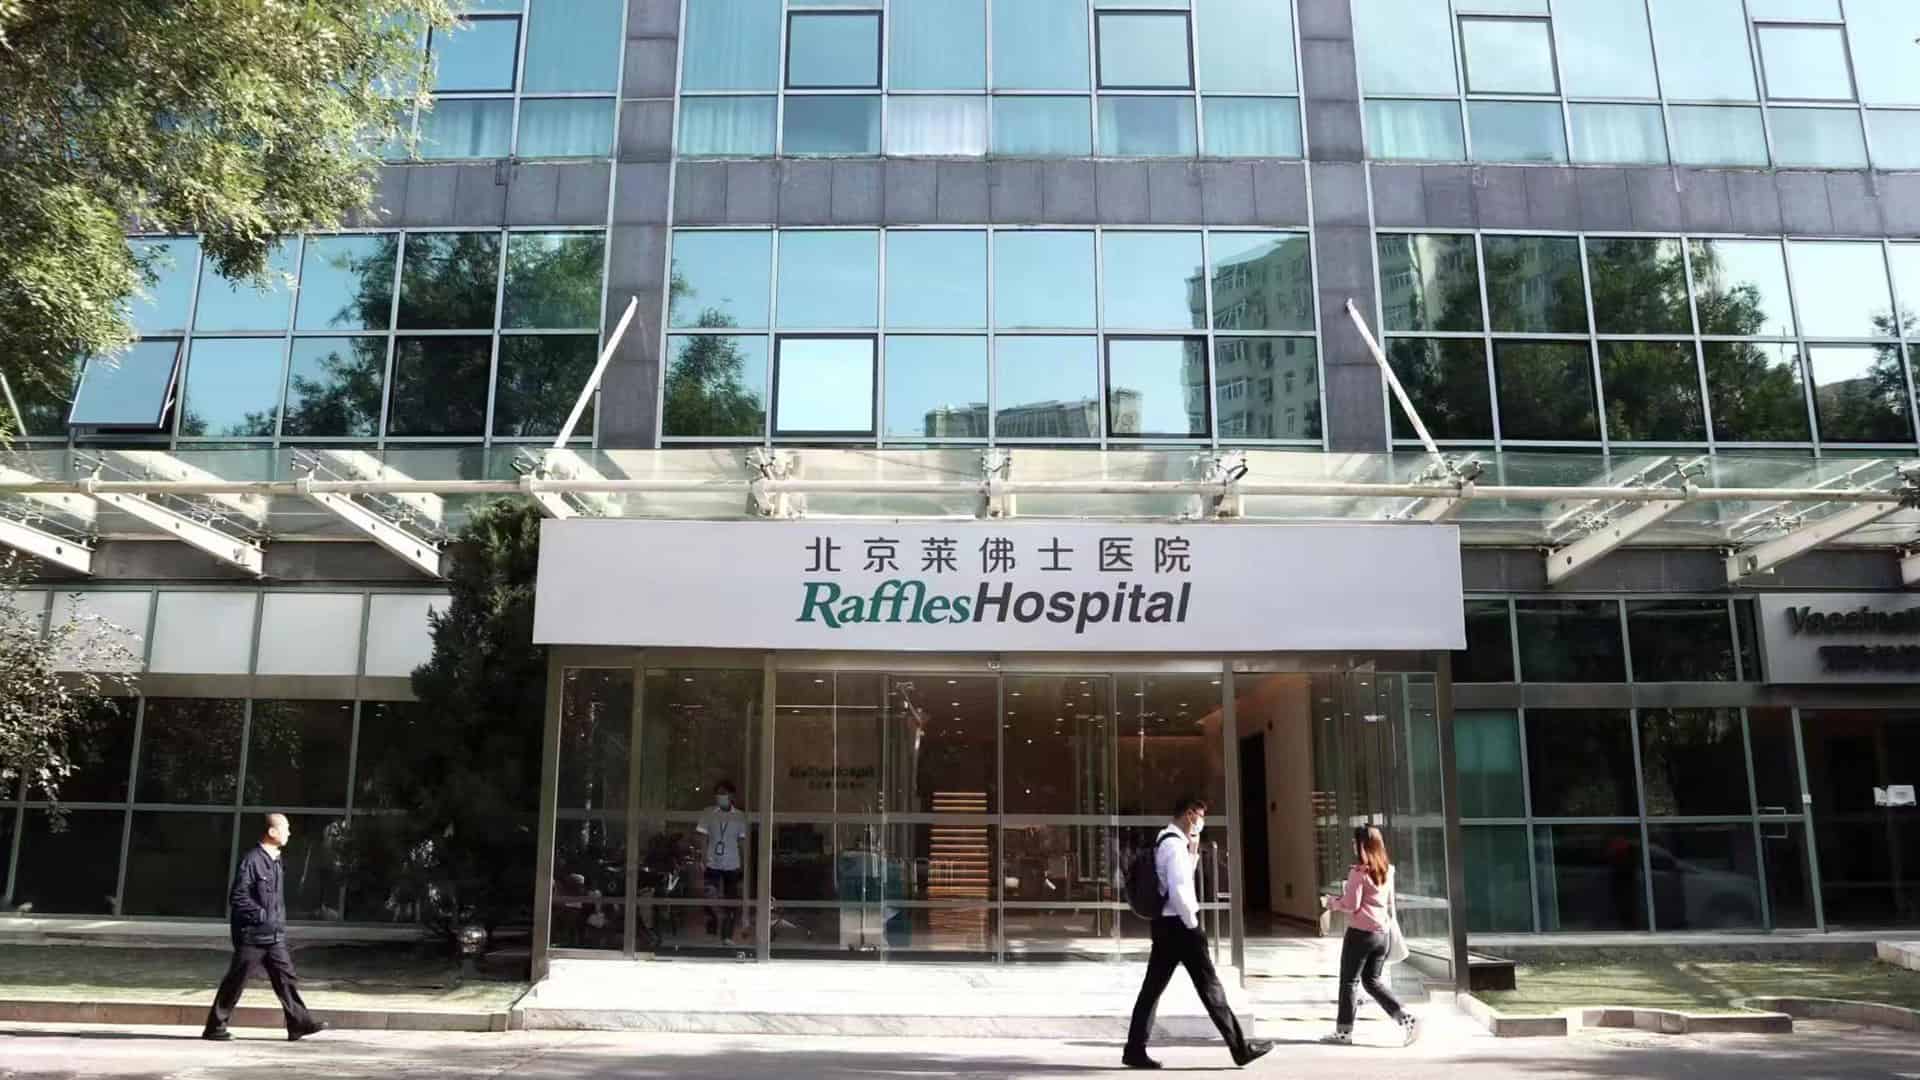 Raffles Hospital Beijing China